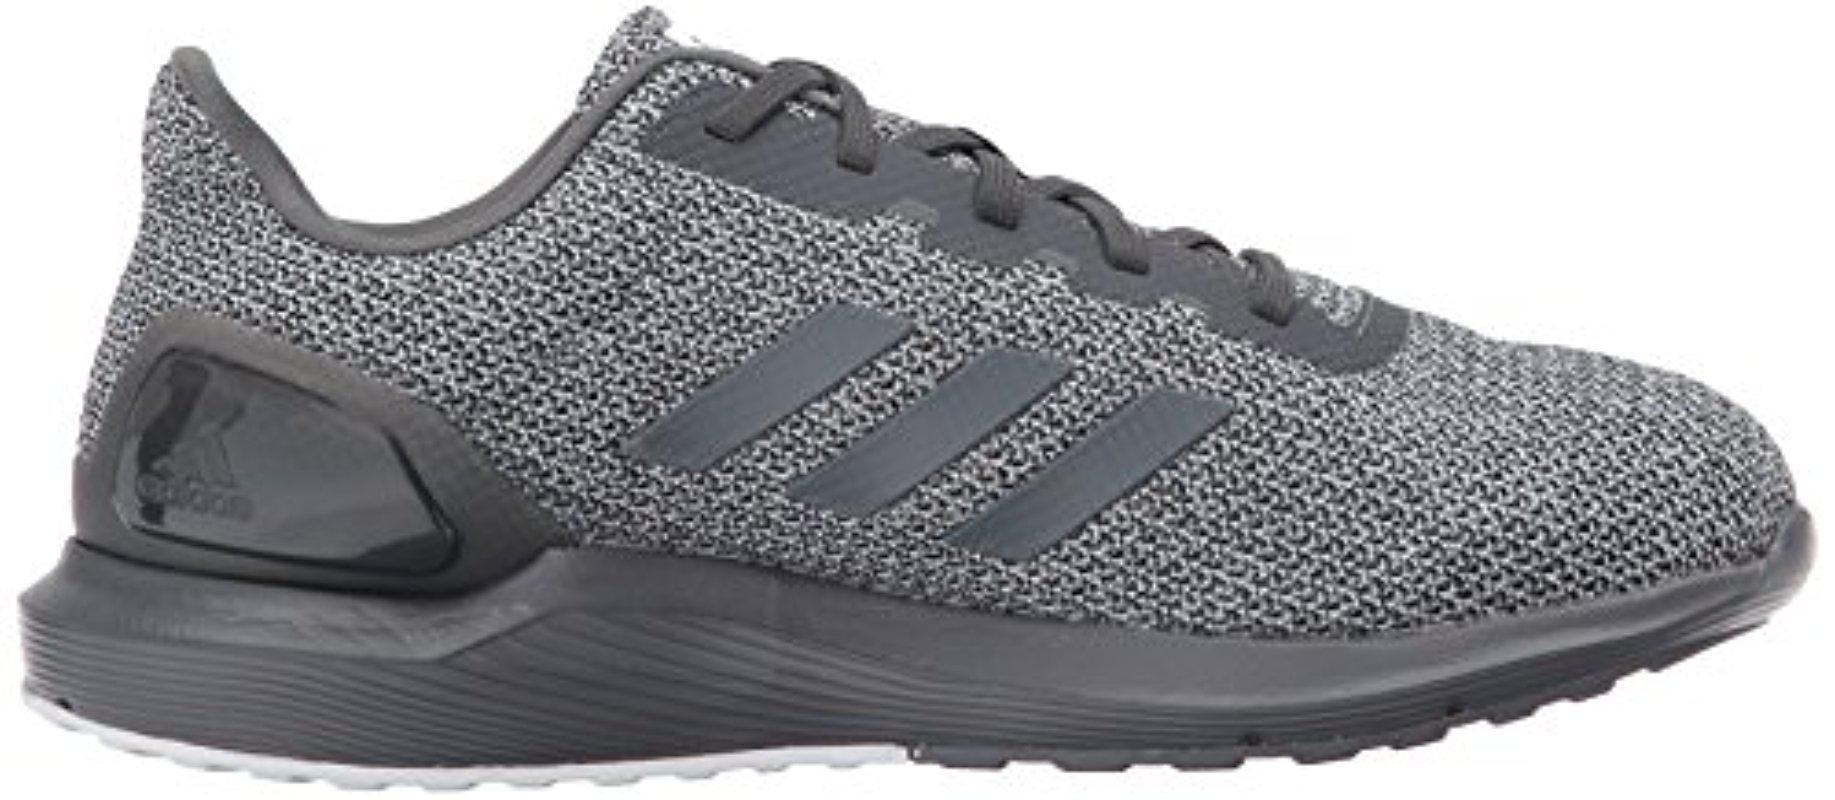 adidas Cosmic 2 Sl M Running Shoe in Gray for Men - Lyst